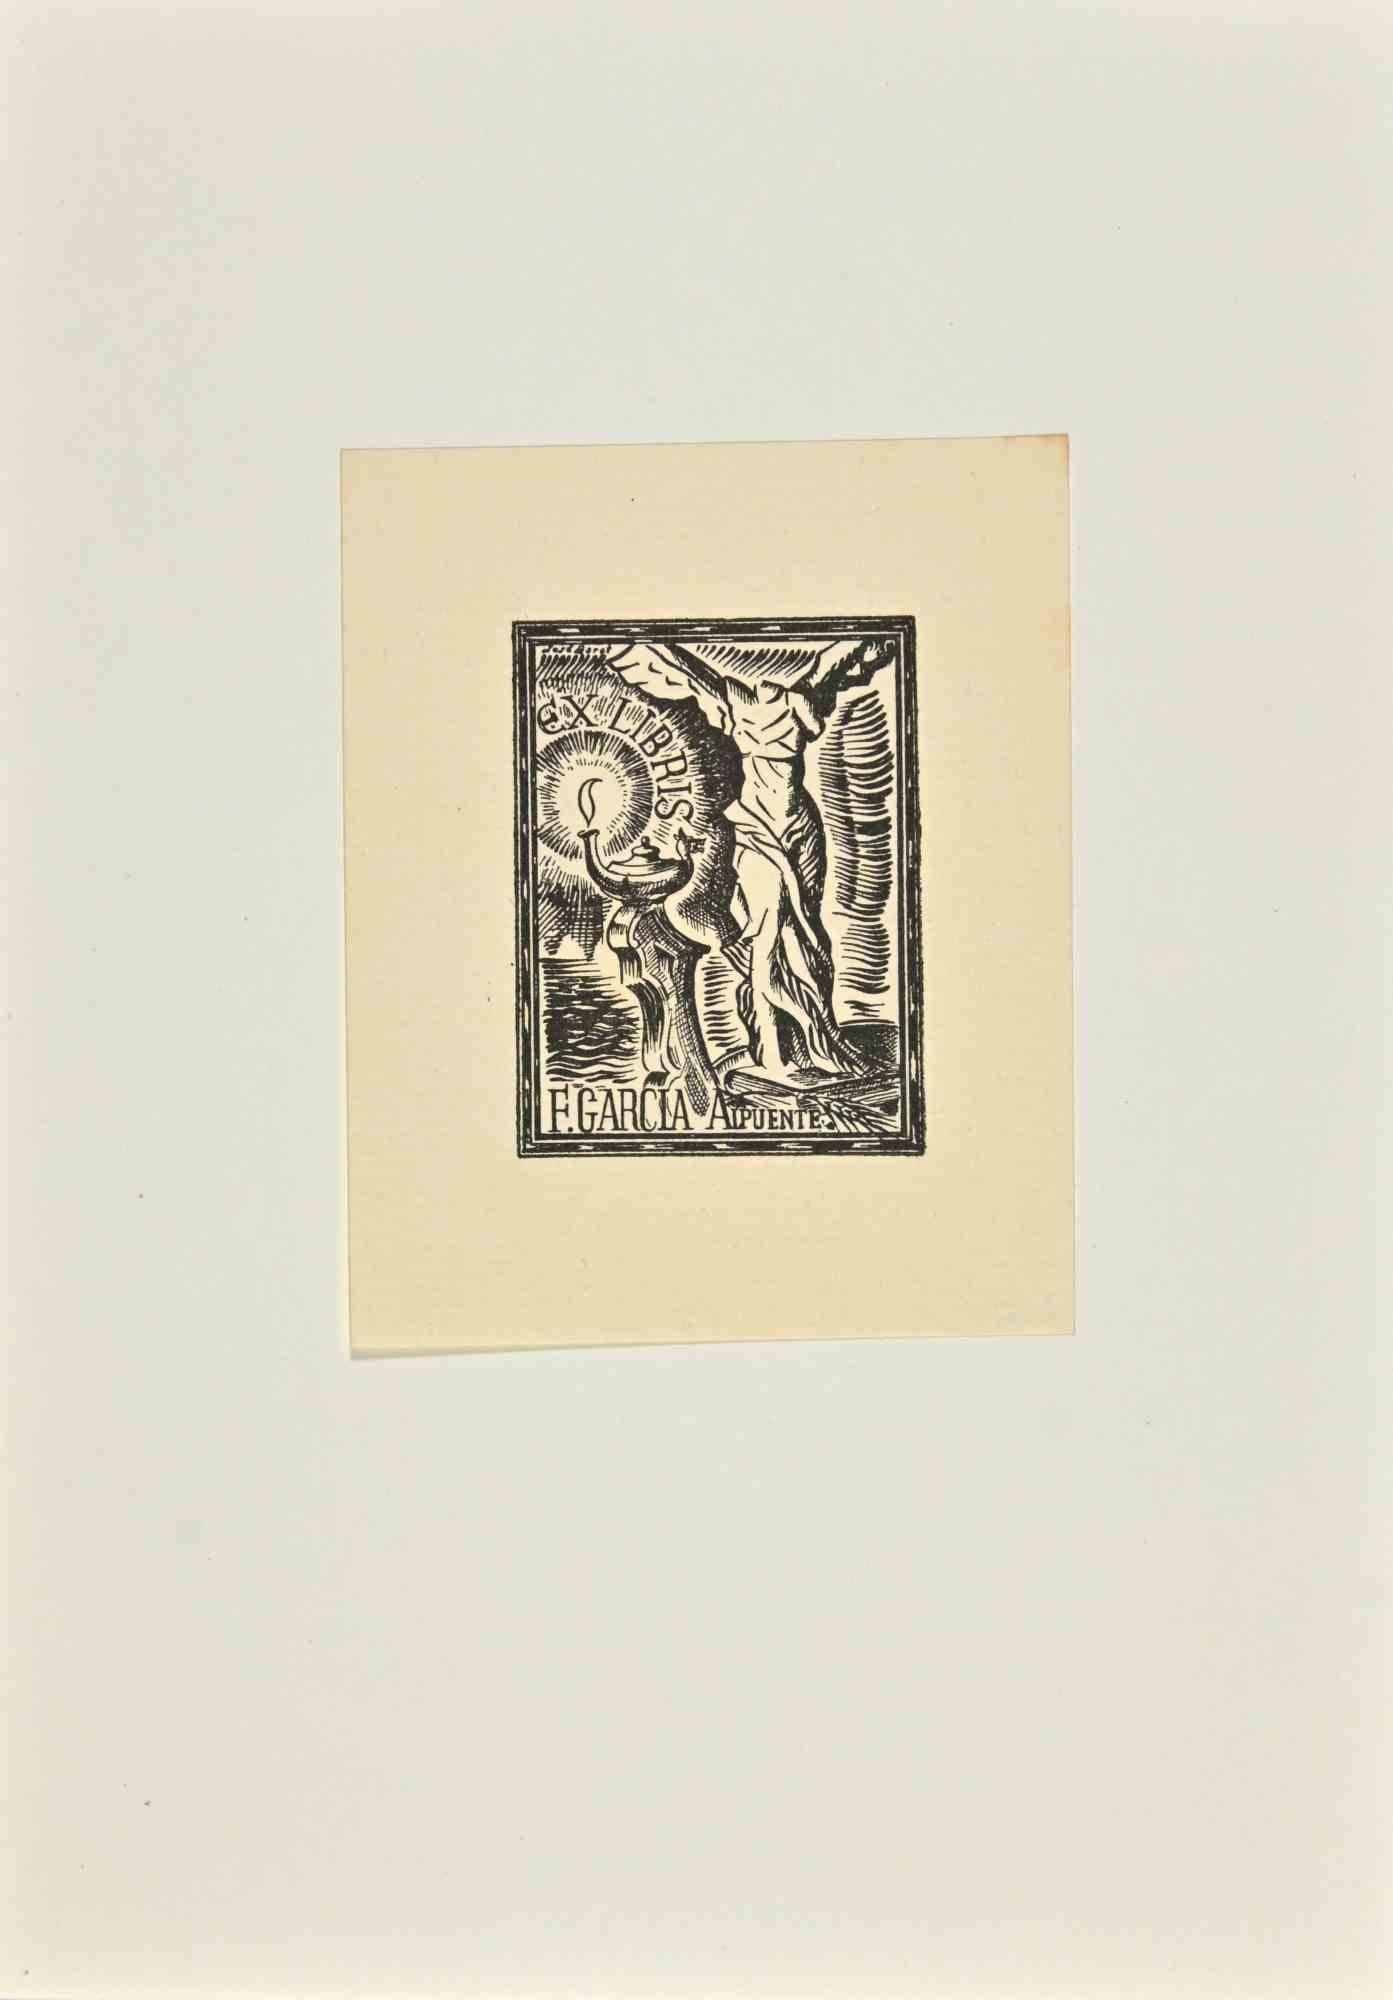 Unknown Figurative Print - Ex Libris - F.Garcia Aipuente - Woodcut - Mid 20th Century